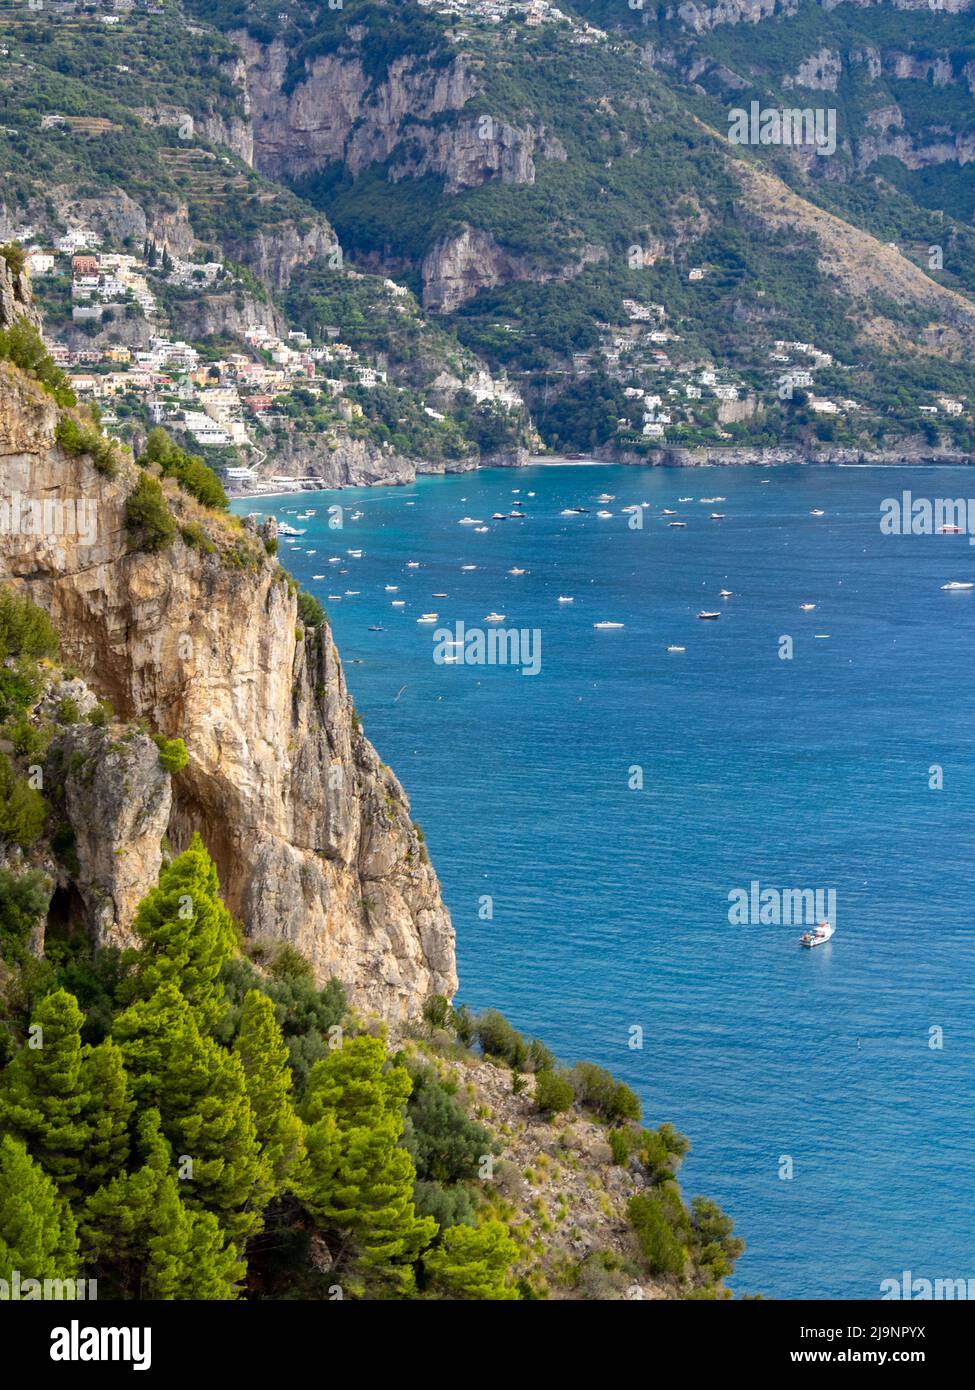 Amalfi Coast landscape Stock Photo - Alamy